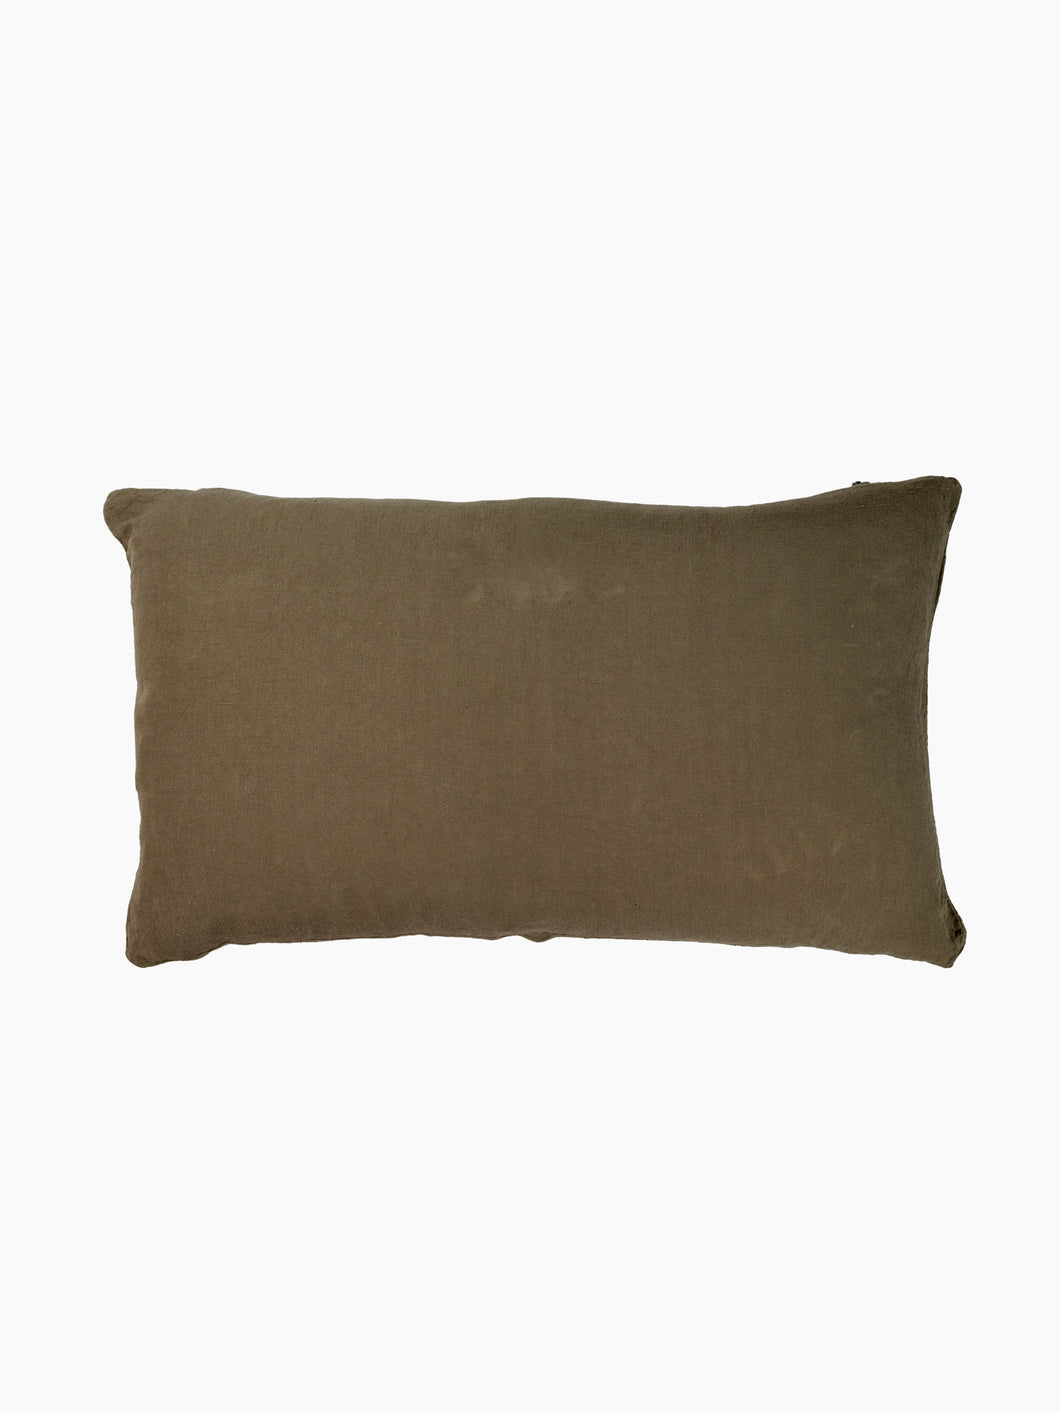 Olive Linen Throw Pillows